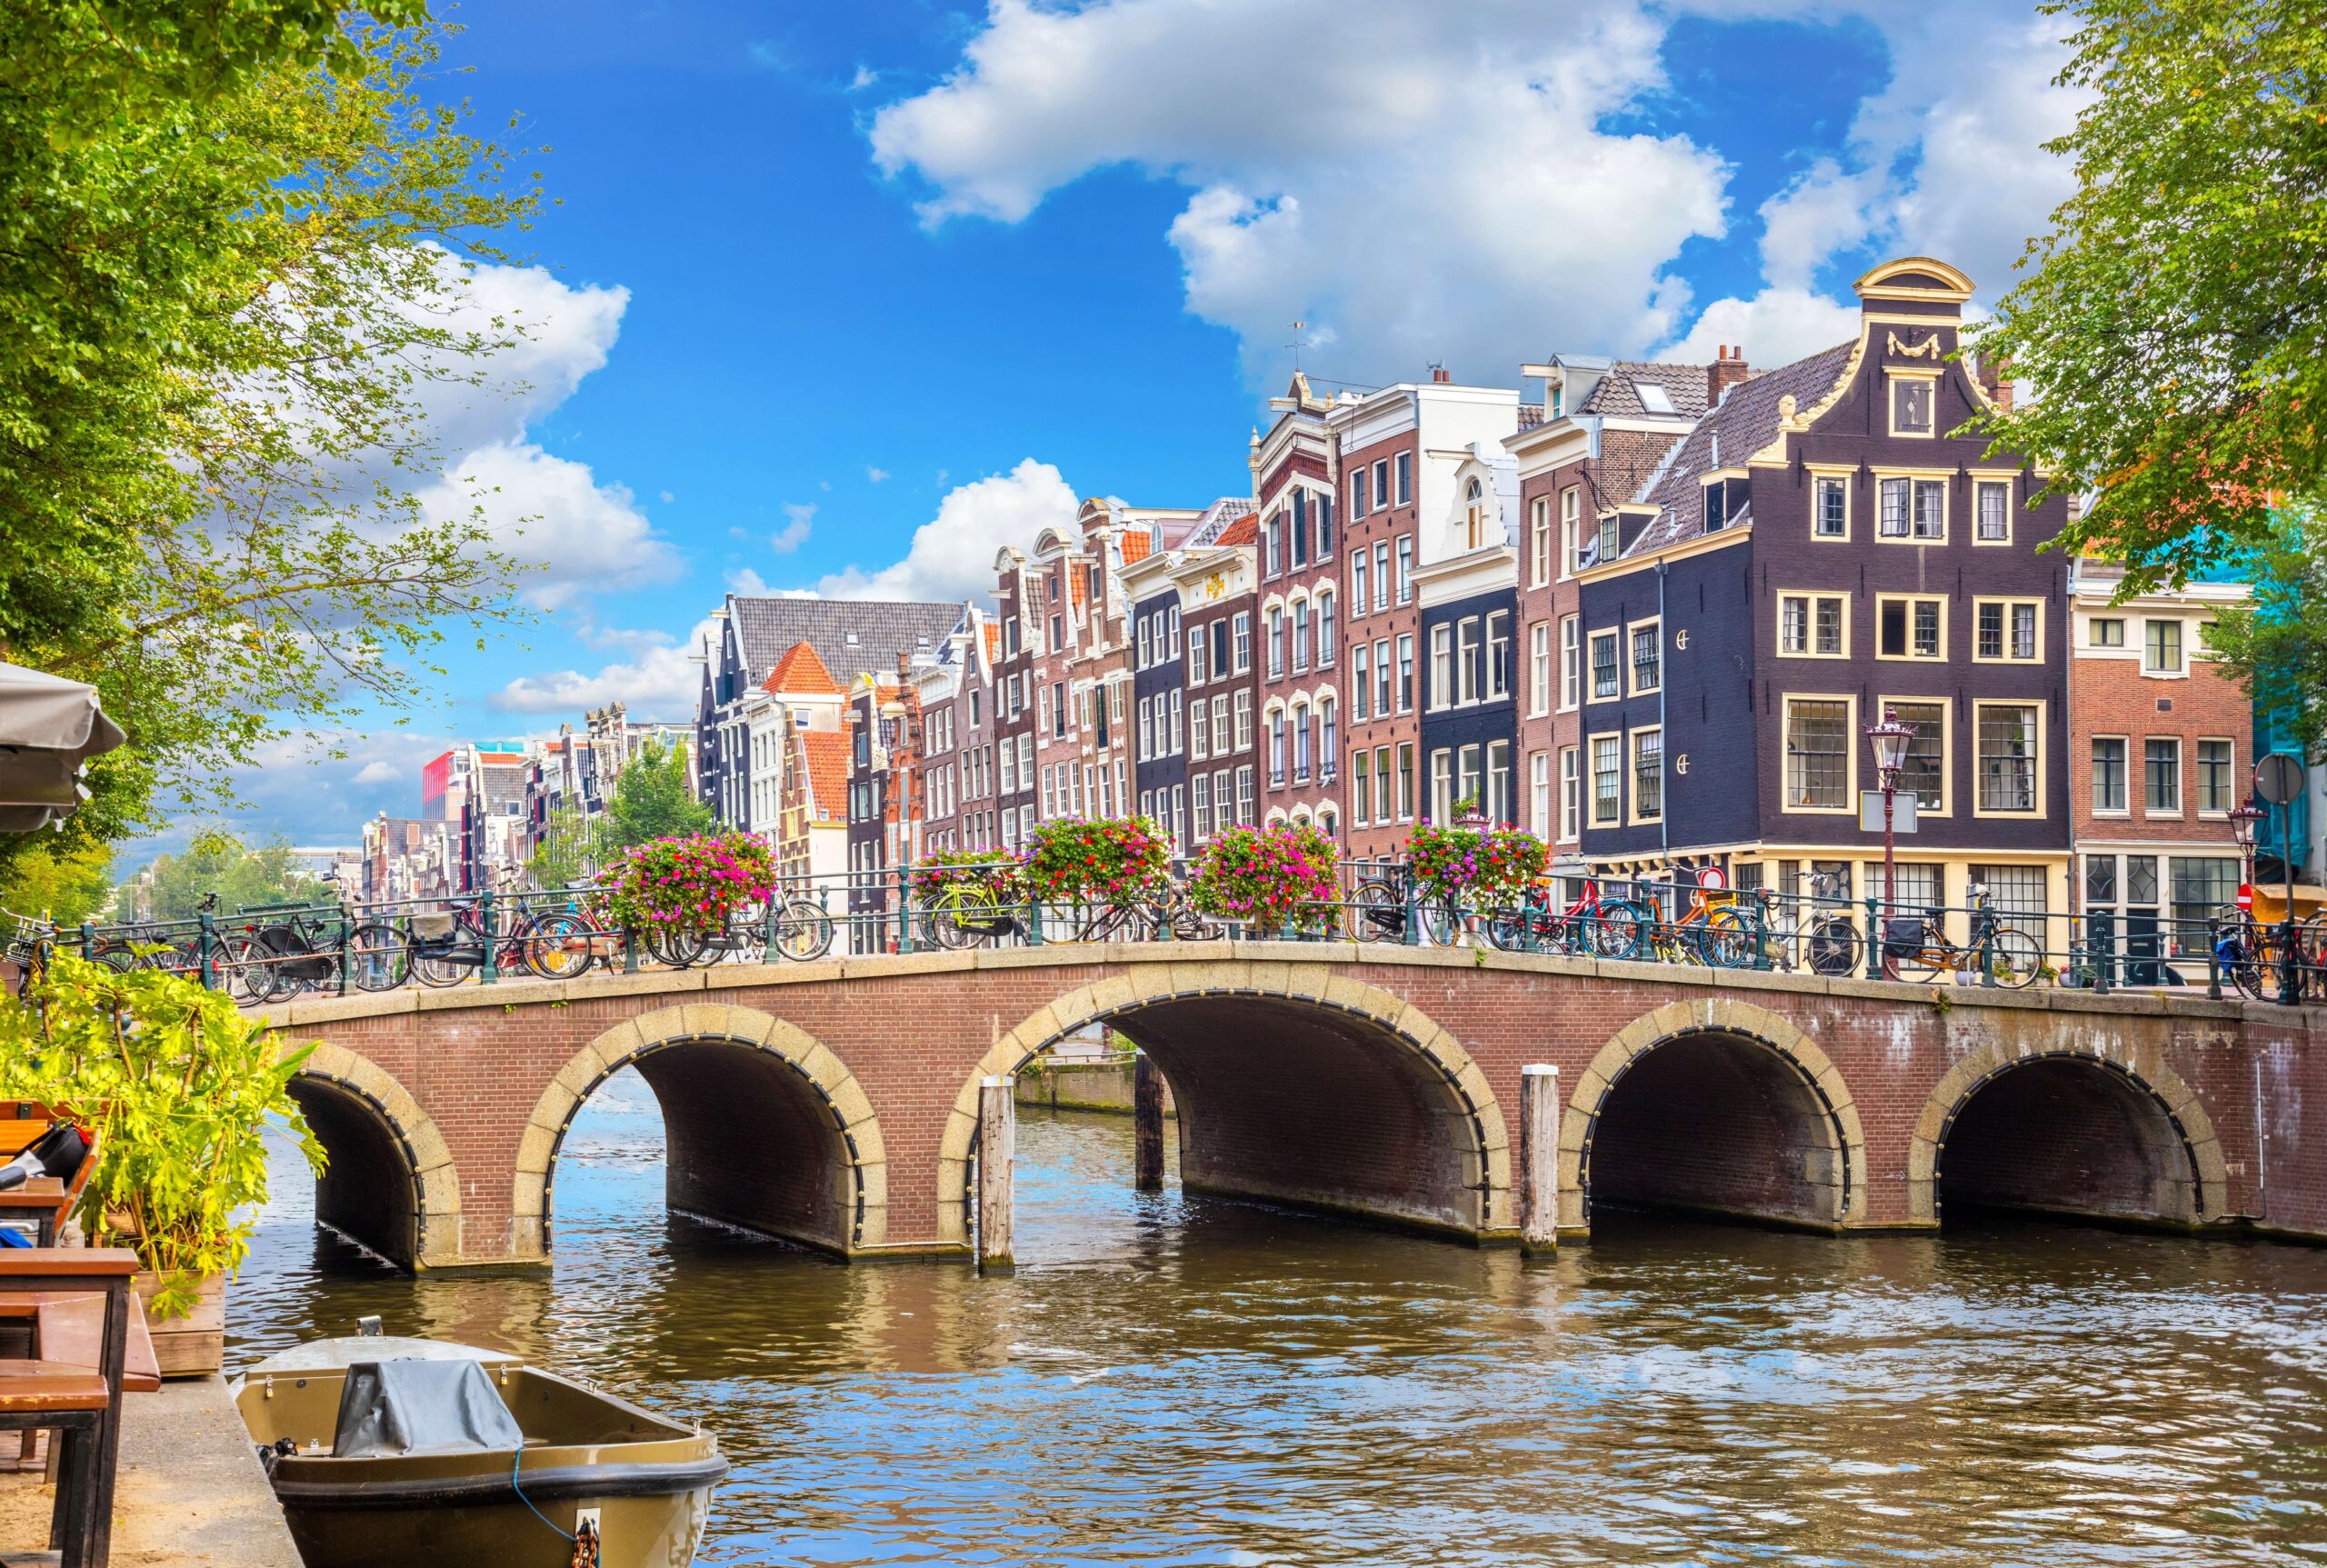 Amsterdam - “Venice của phương Bắc”